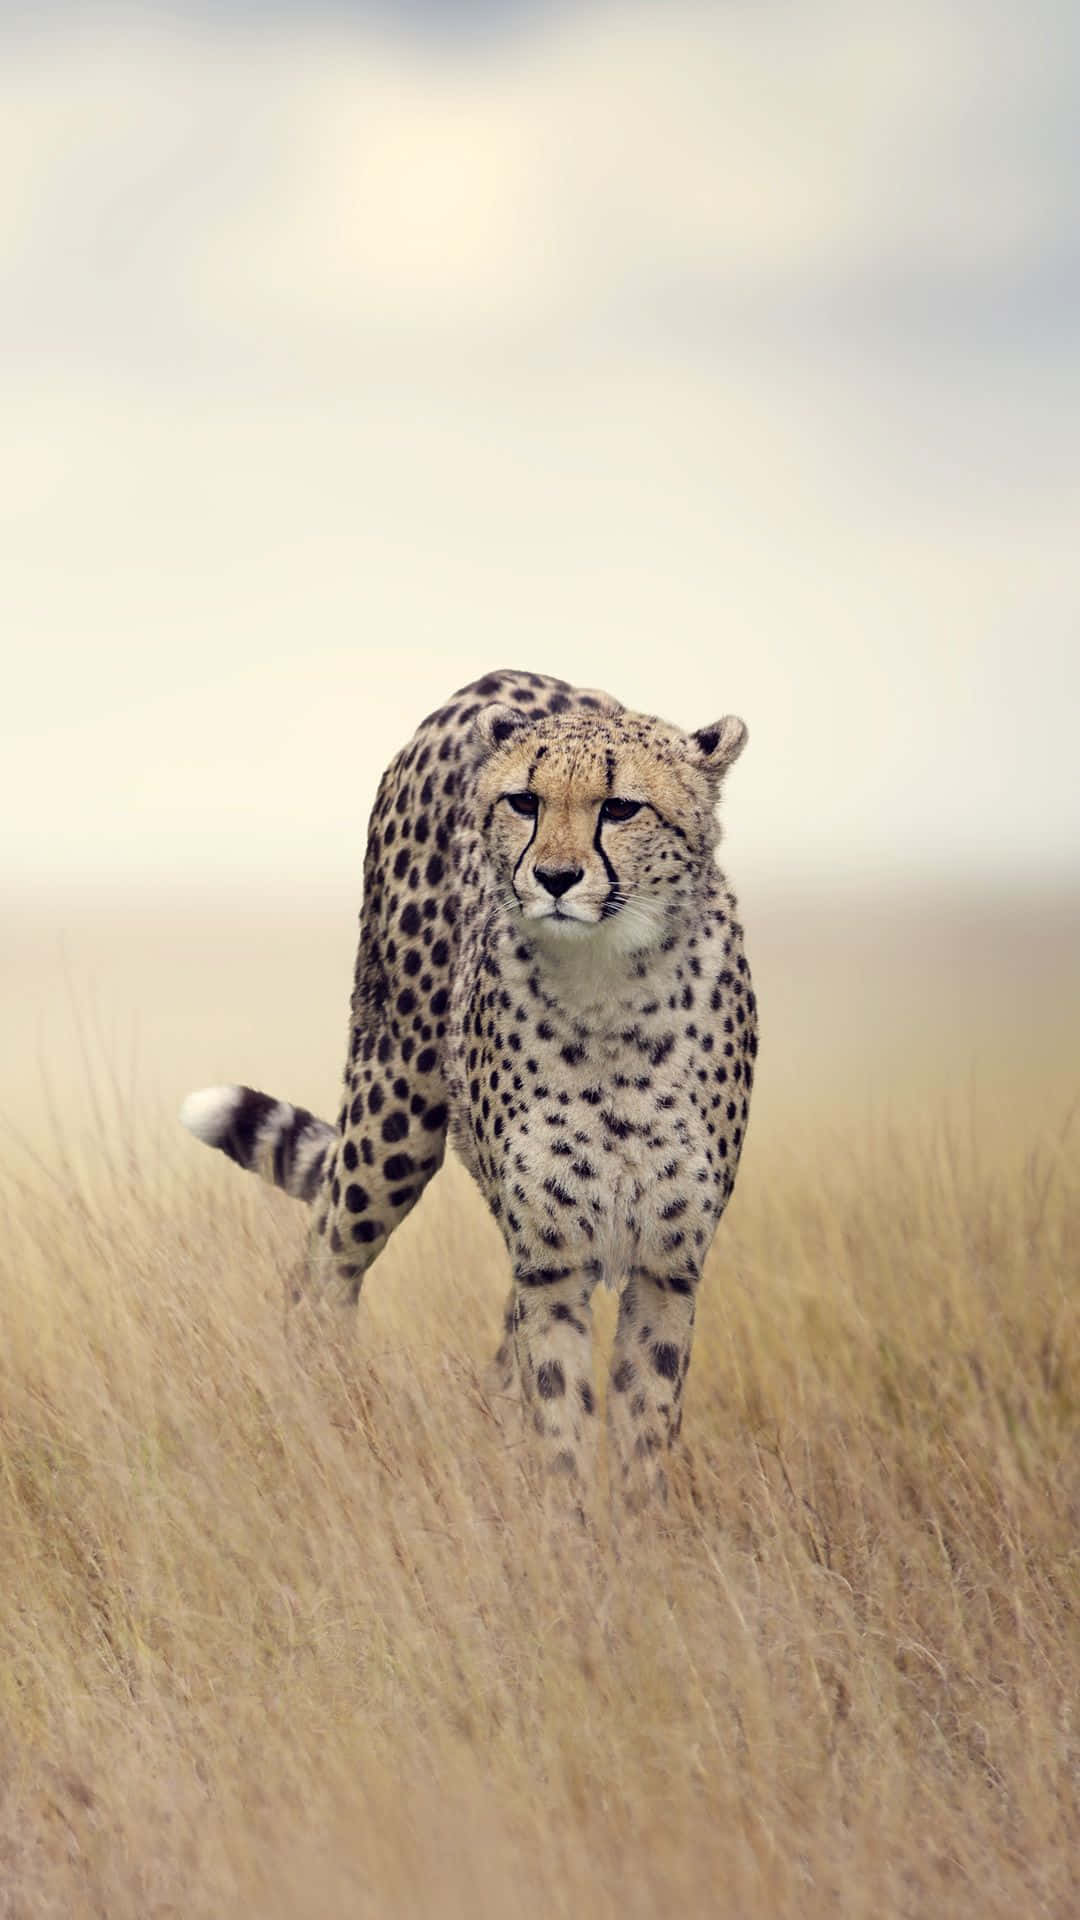 Cheetah In The Wild Wallpaper